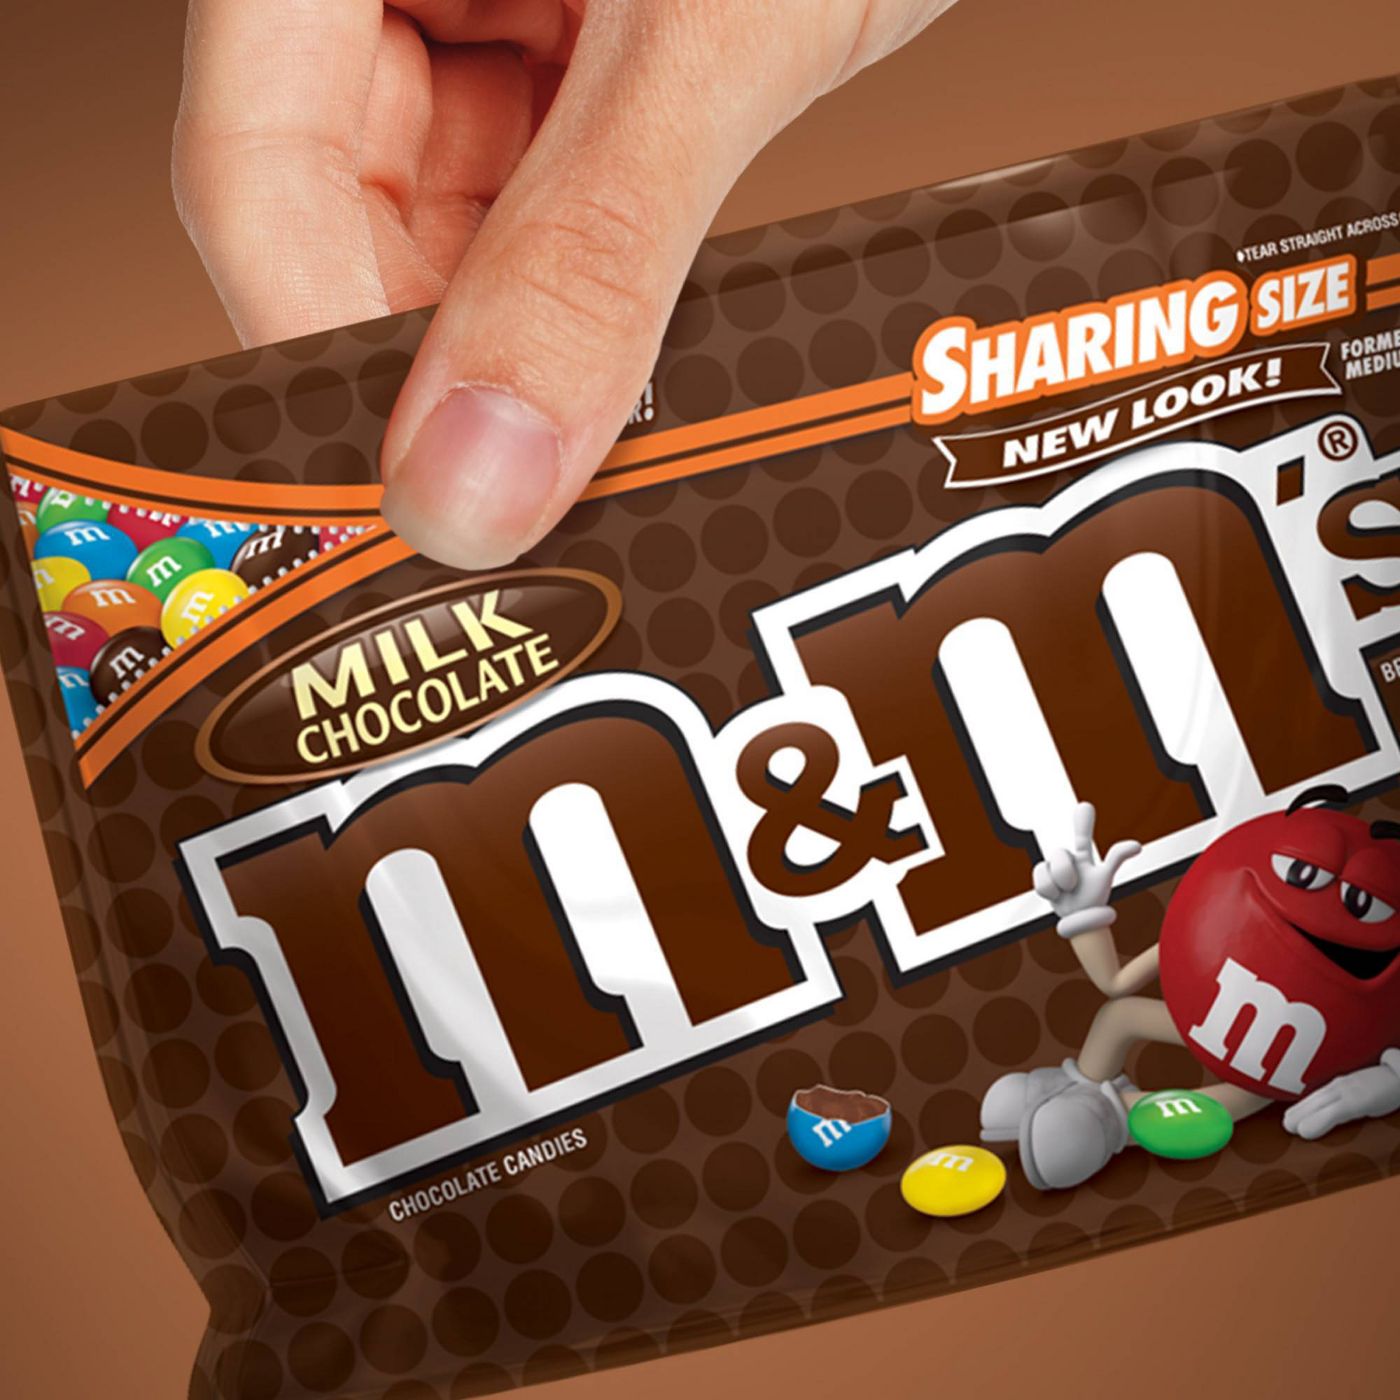 M&M'S Peanut Milk Chocolate Candy Sharing Size Bag, 10.7 oz